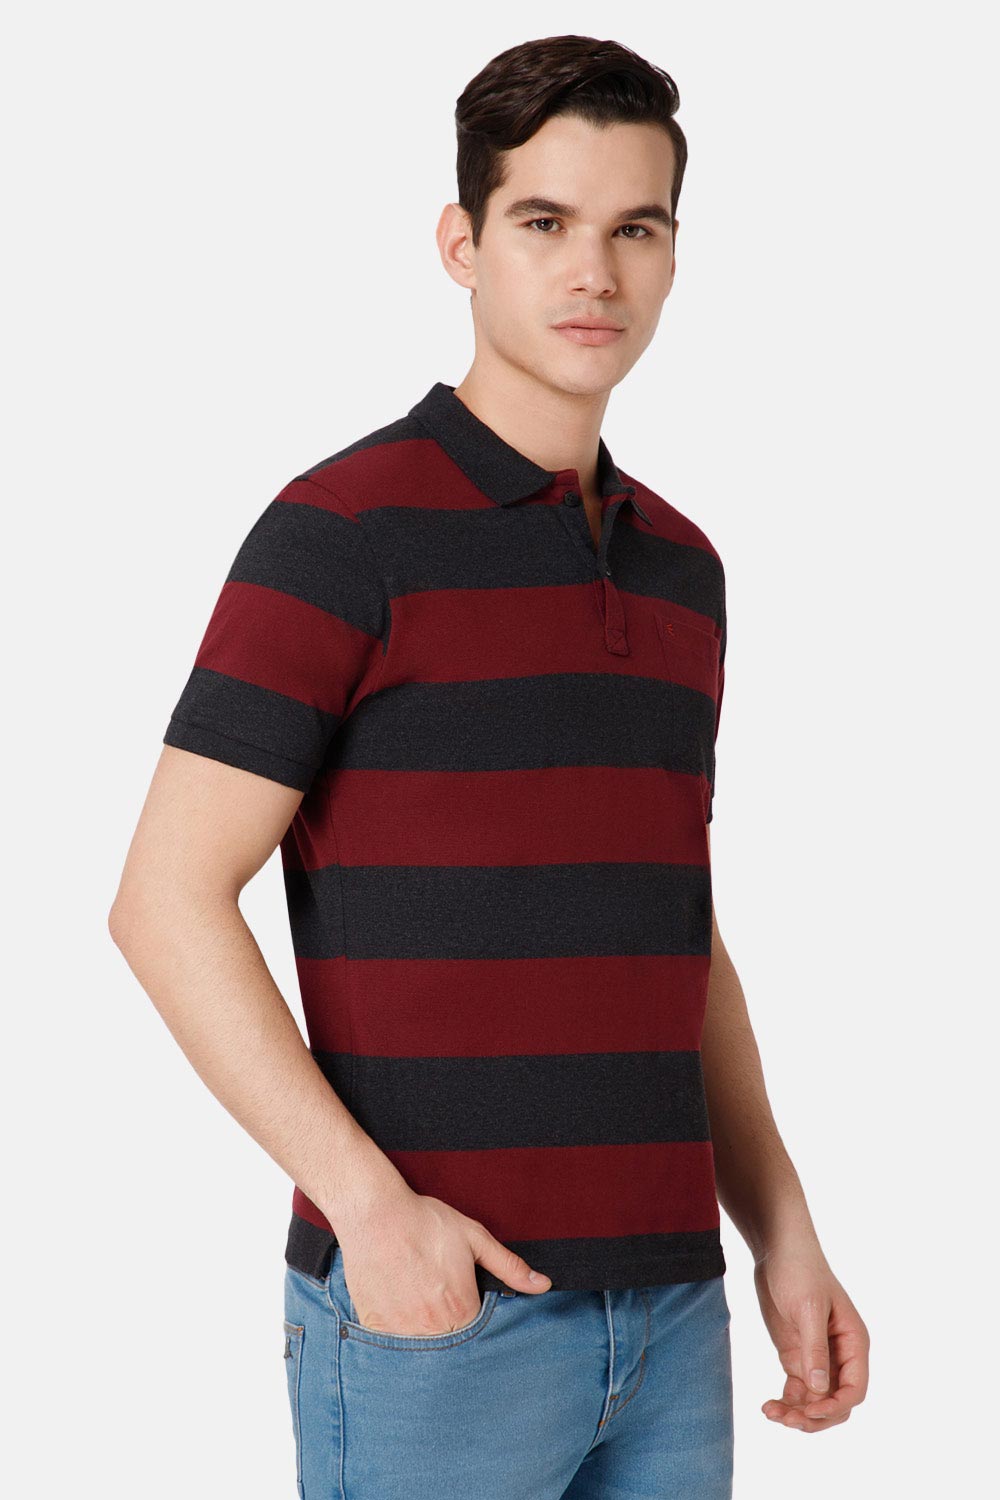 Enhance T-Shirts Men's Polo - Red - TS41